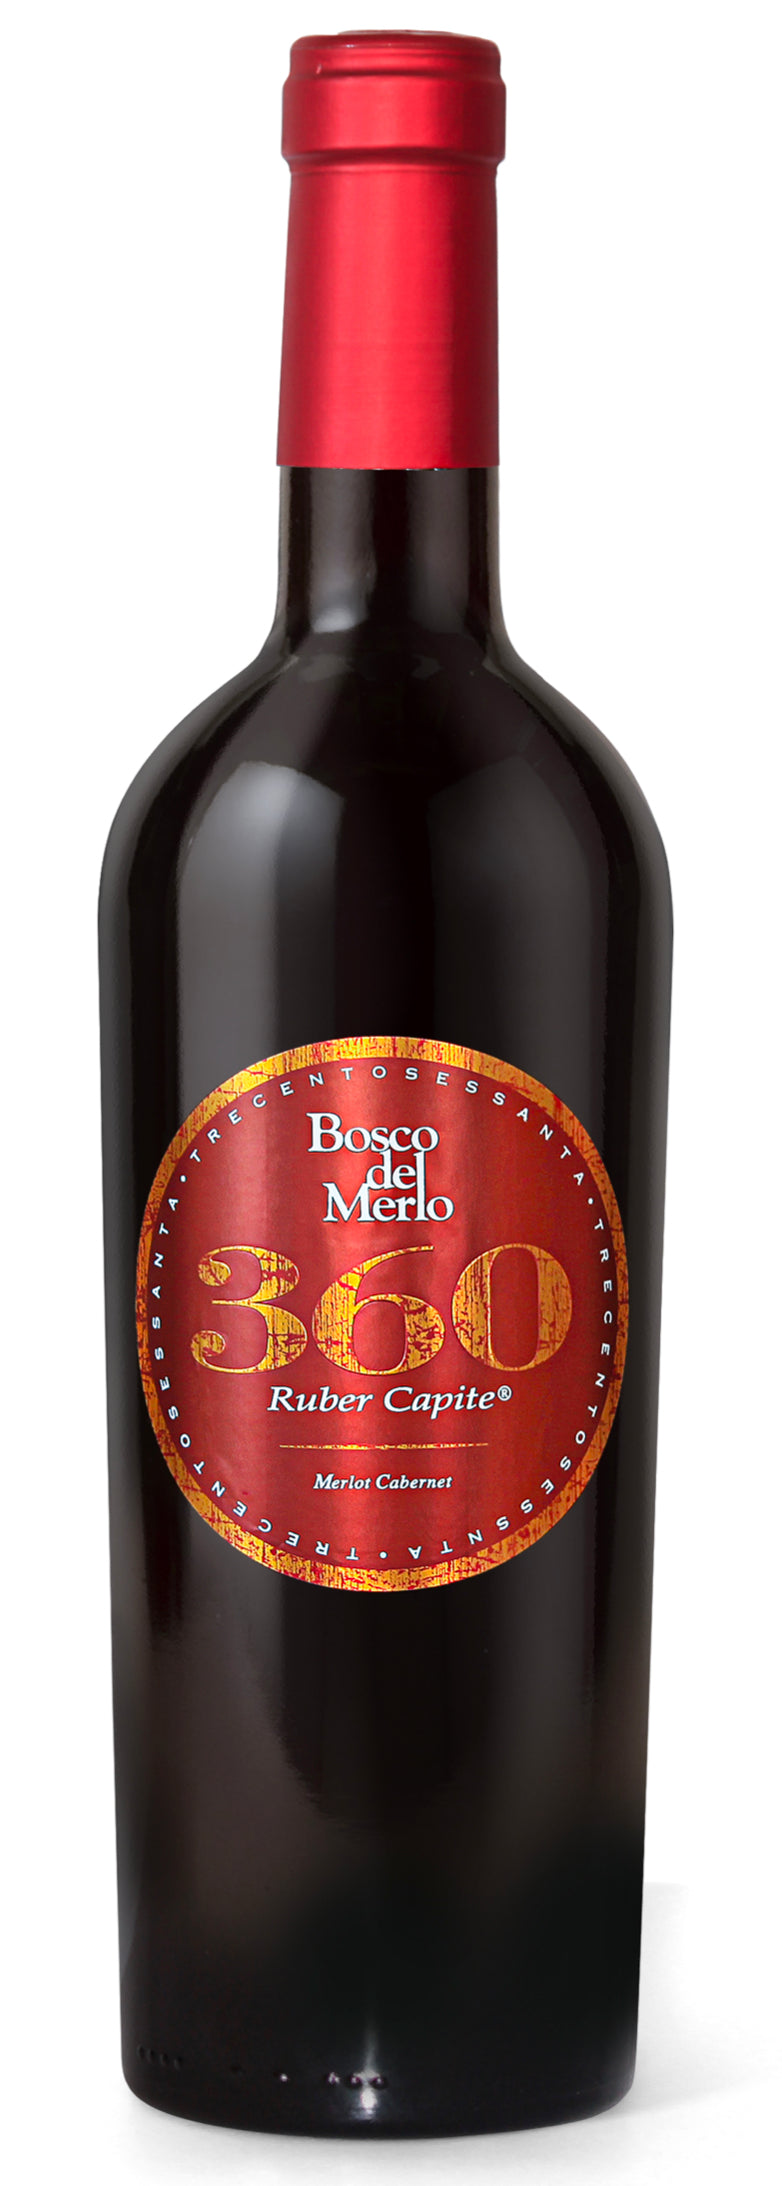 360 Merlot Cabernet